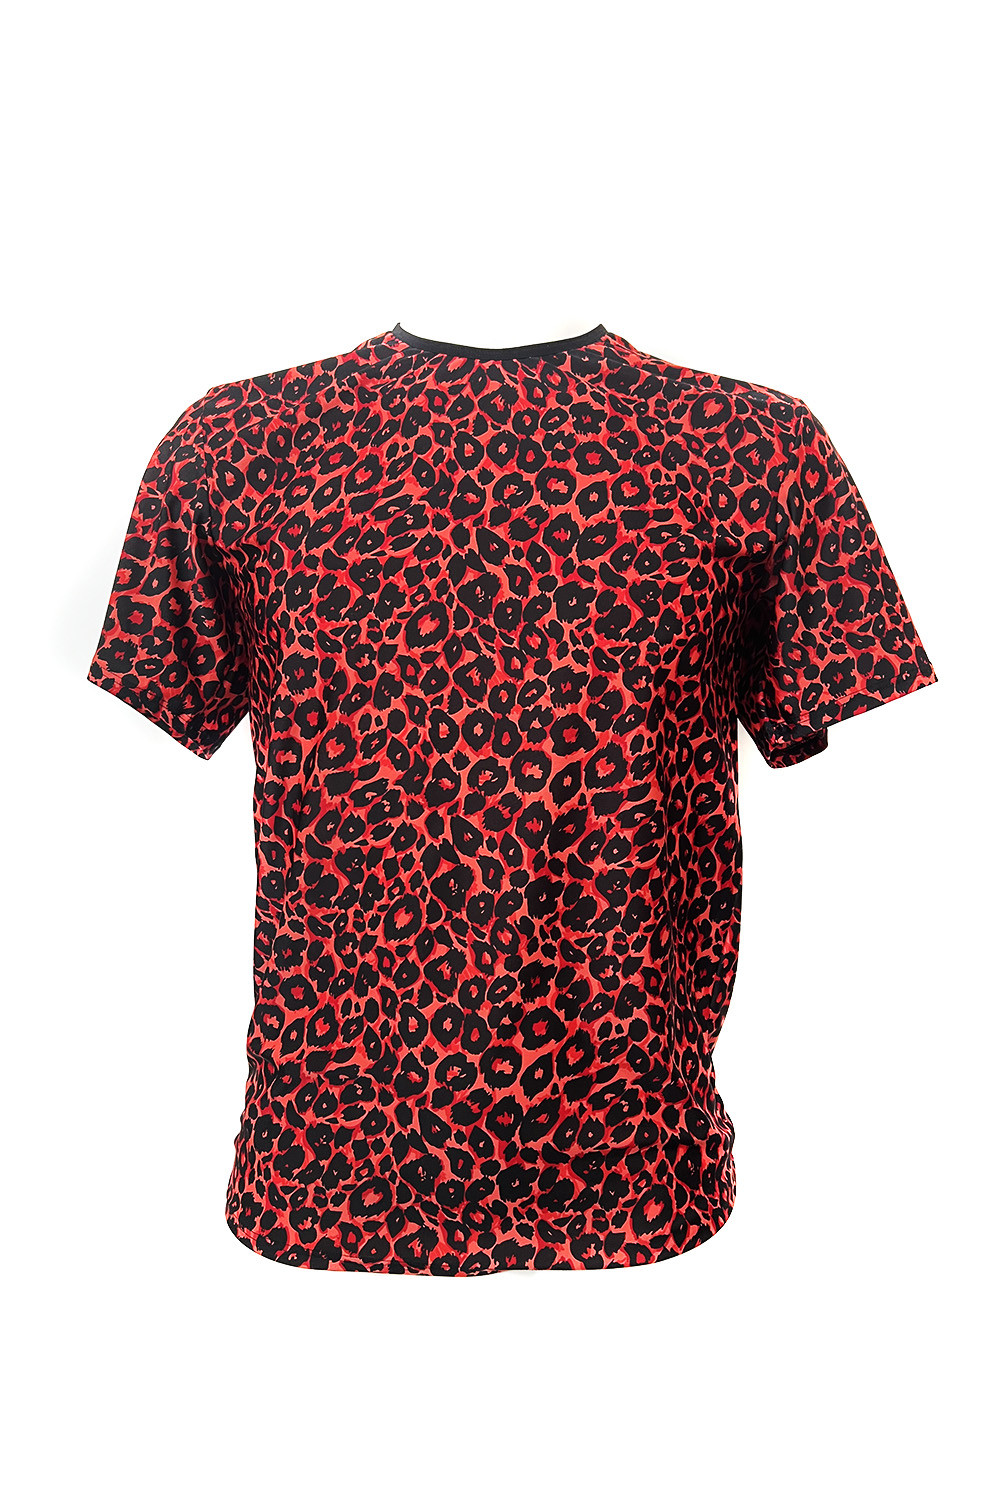 Pánské tričko Tribal T-shirt - Anais Barva: červená, Velikost: XL